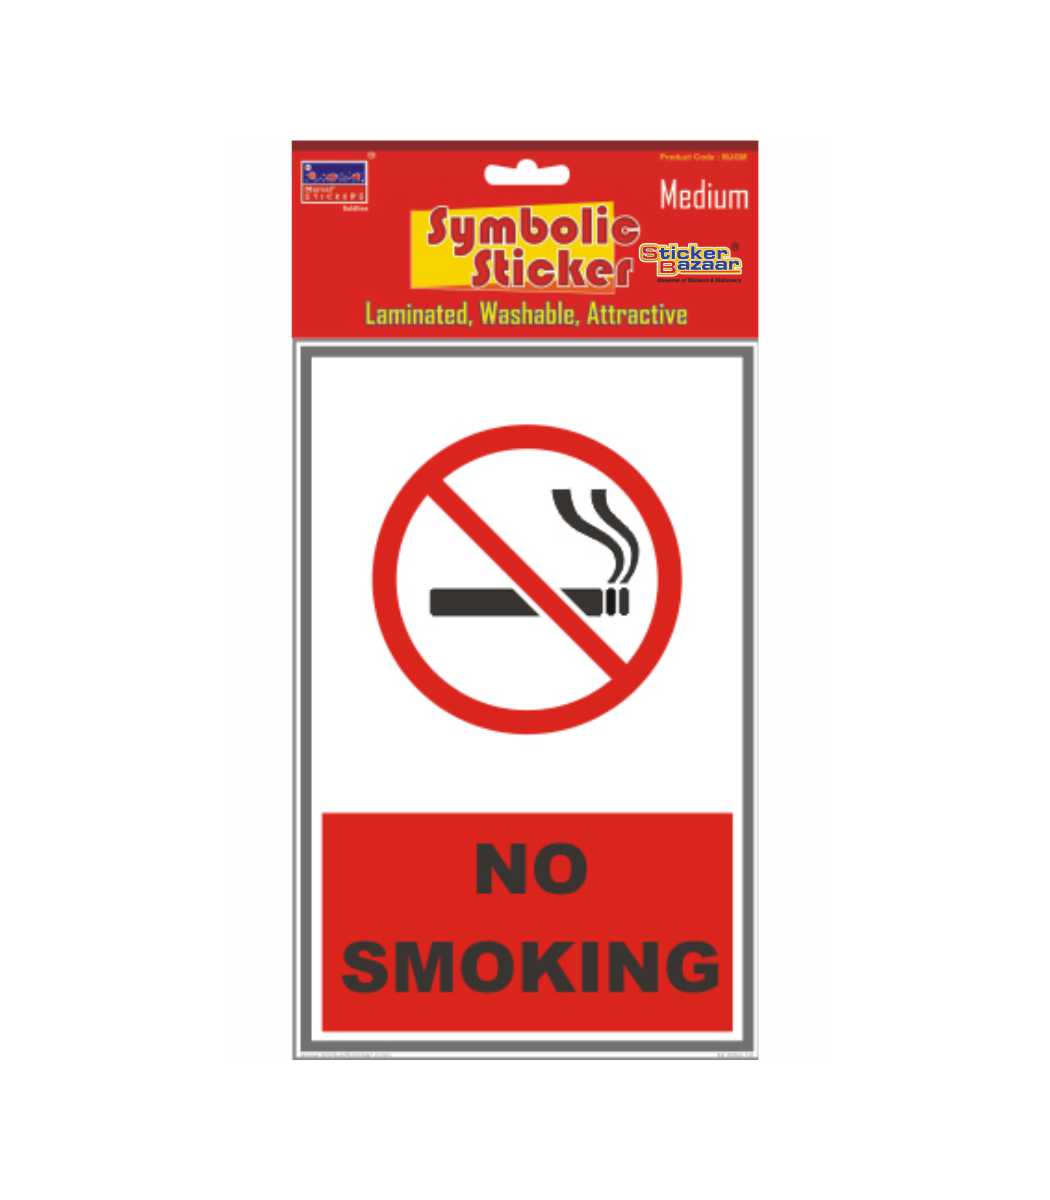 No Smoking 2 Medium Symbolic Sticker